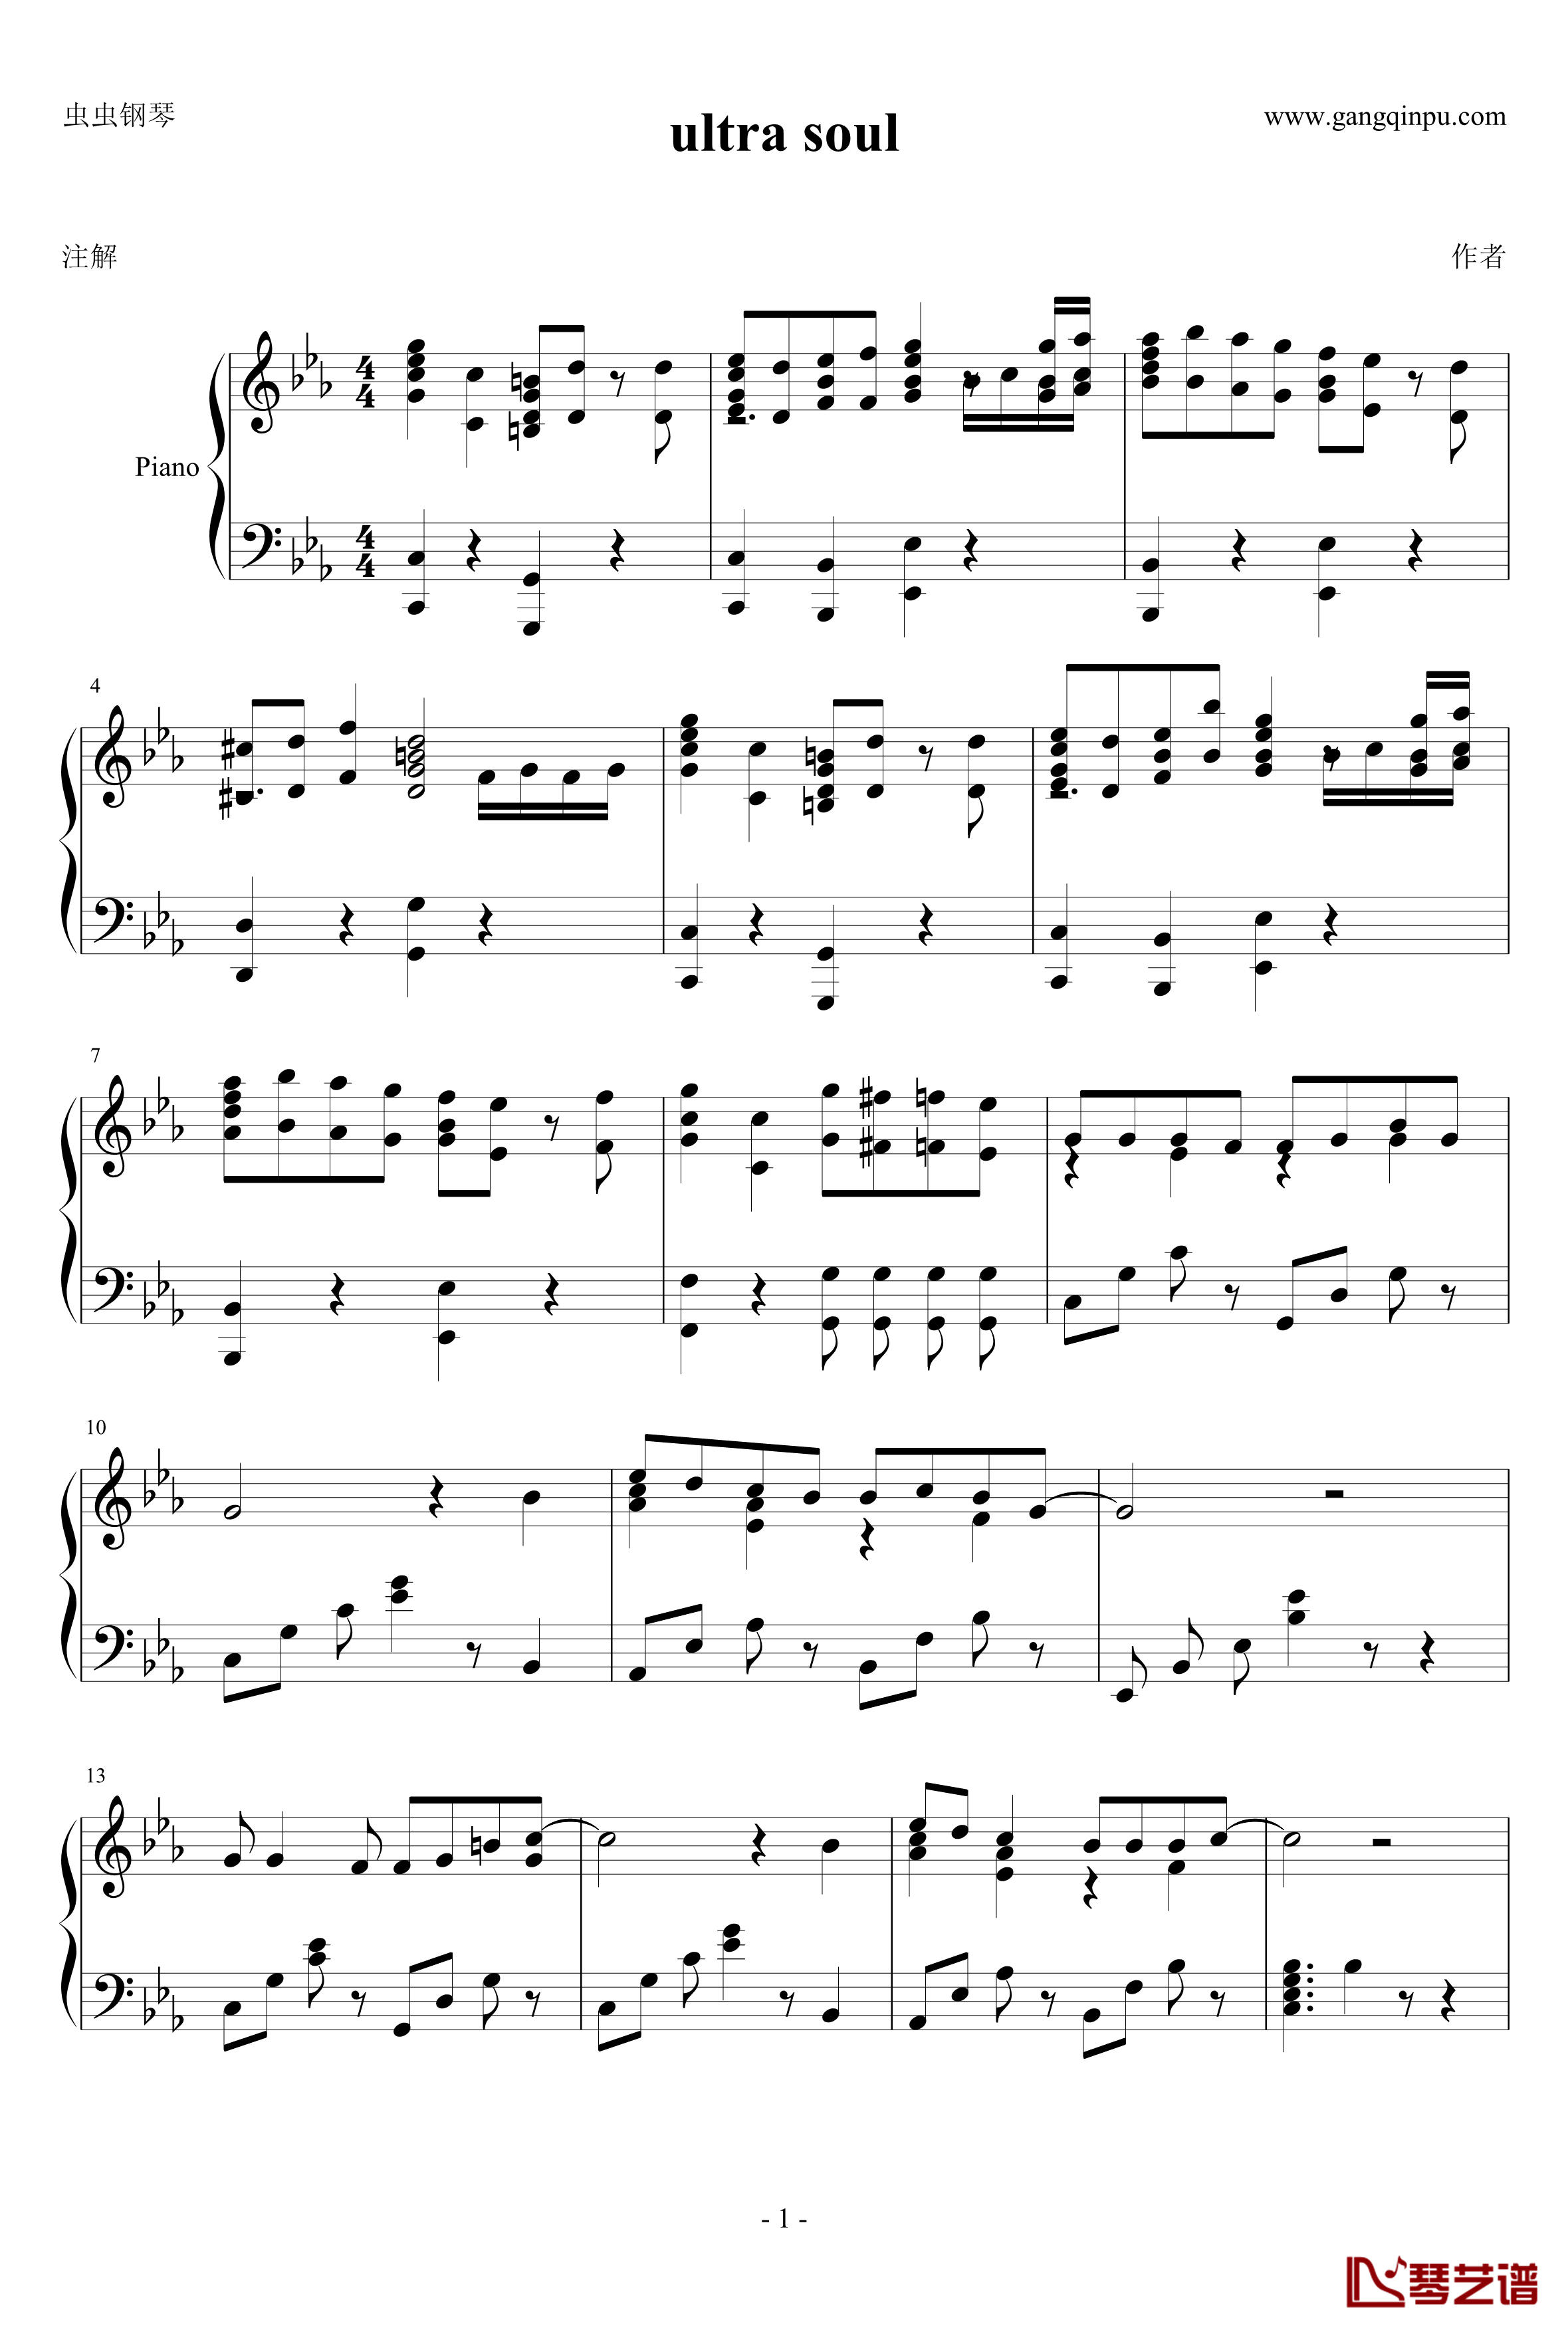 ultra soul钢琴谱-激情版-B‘z1